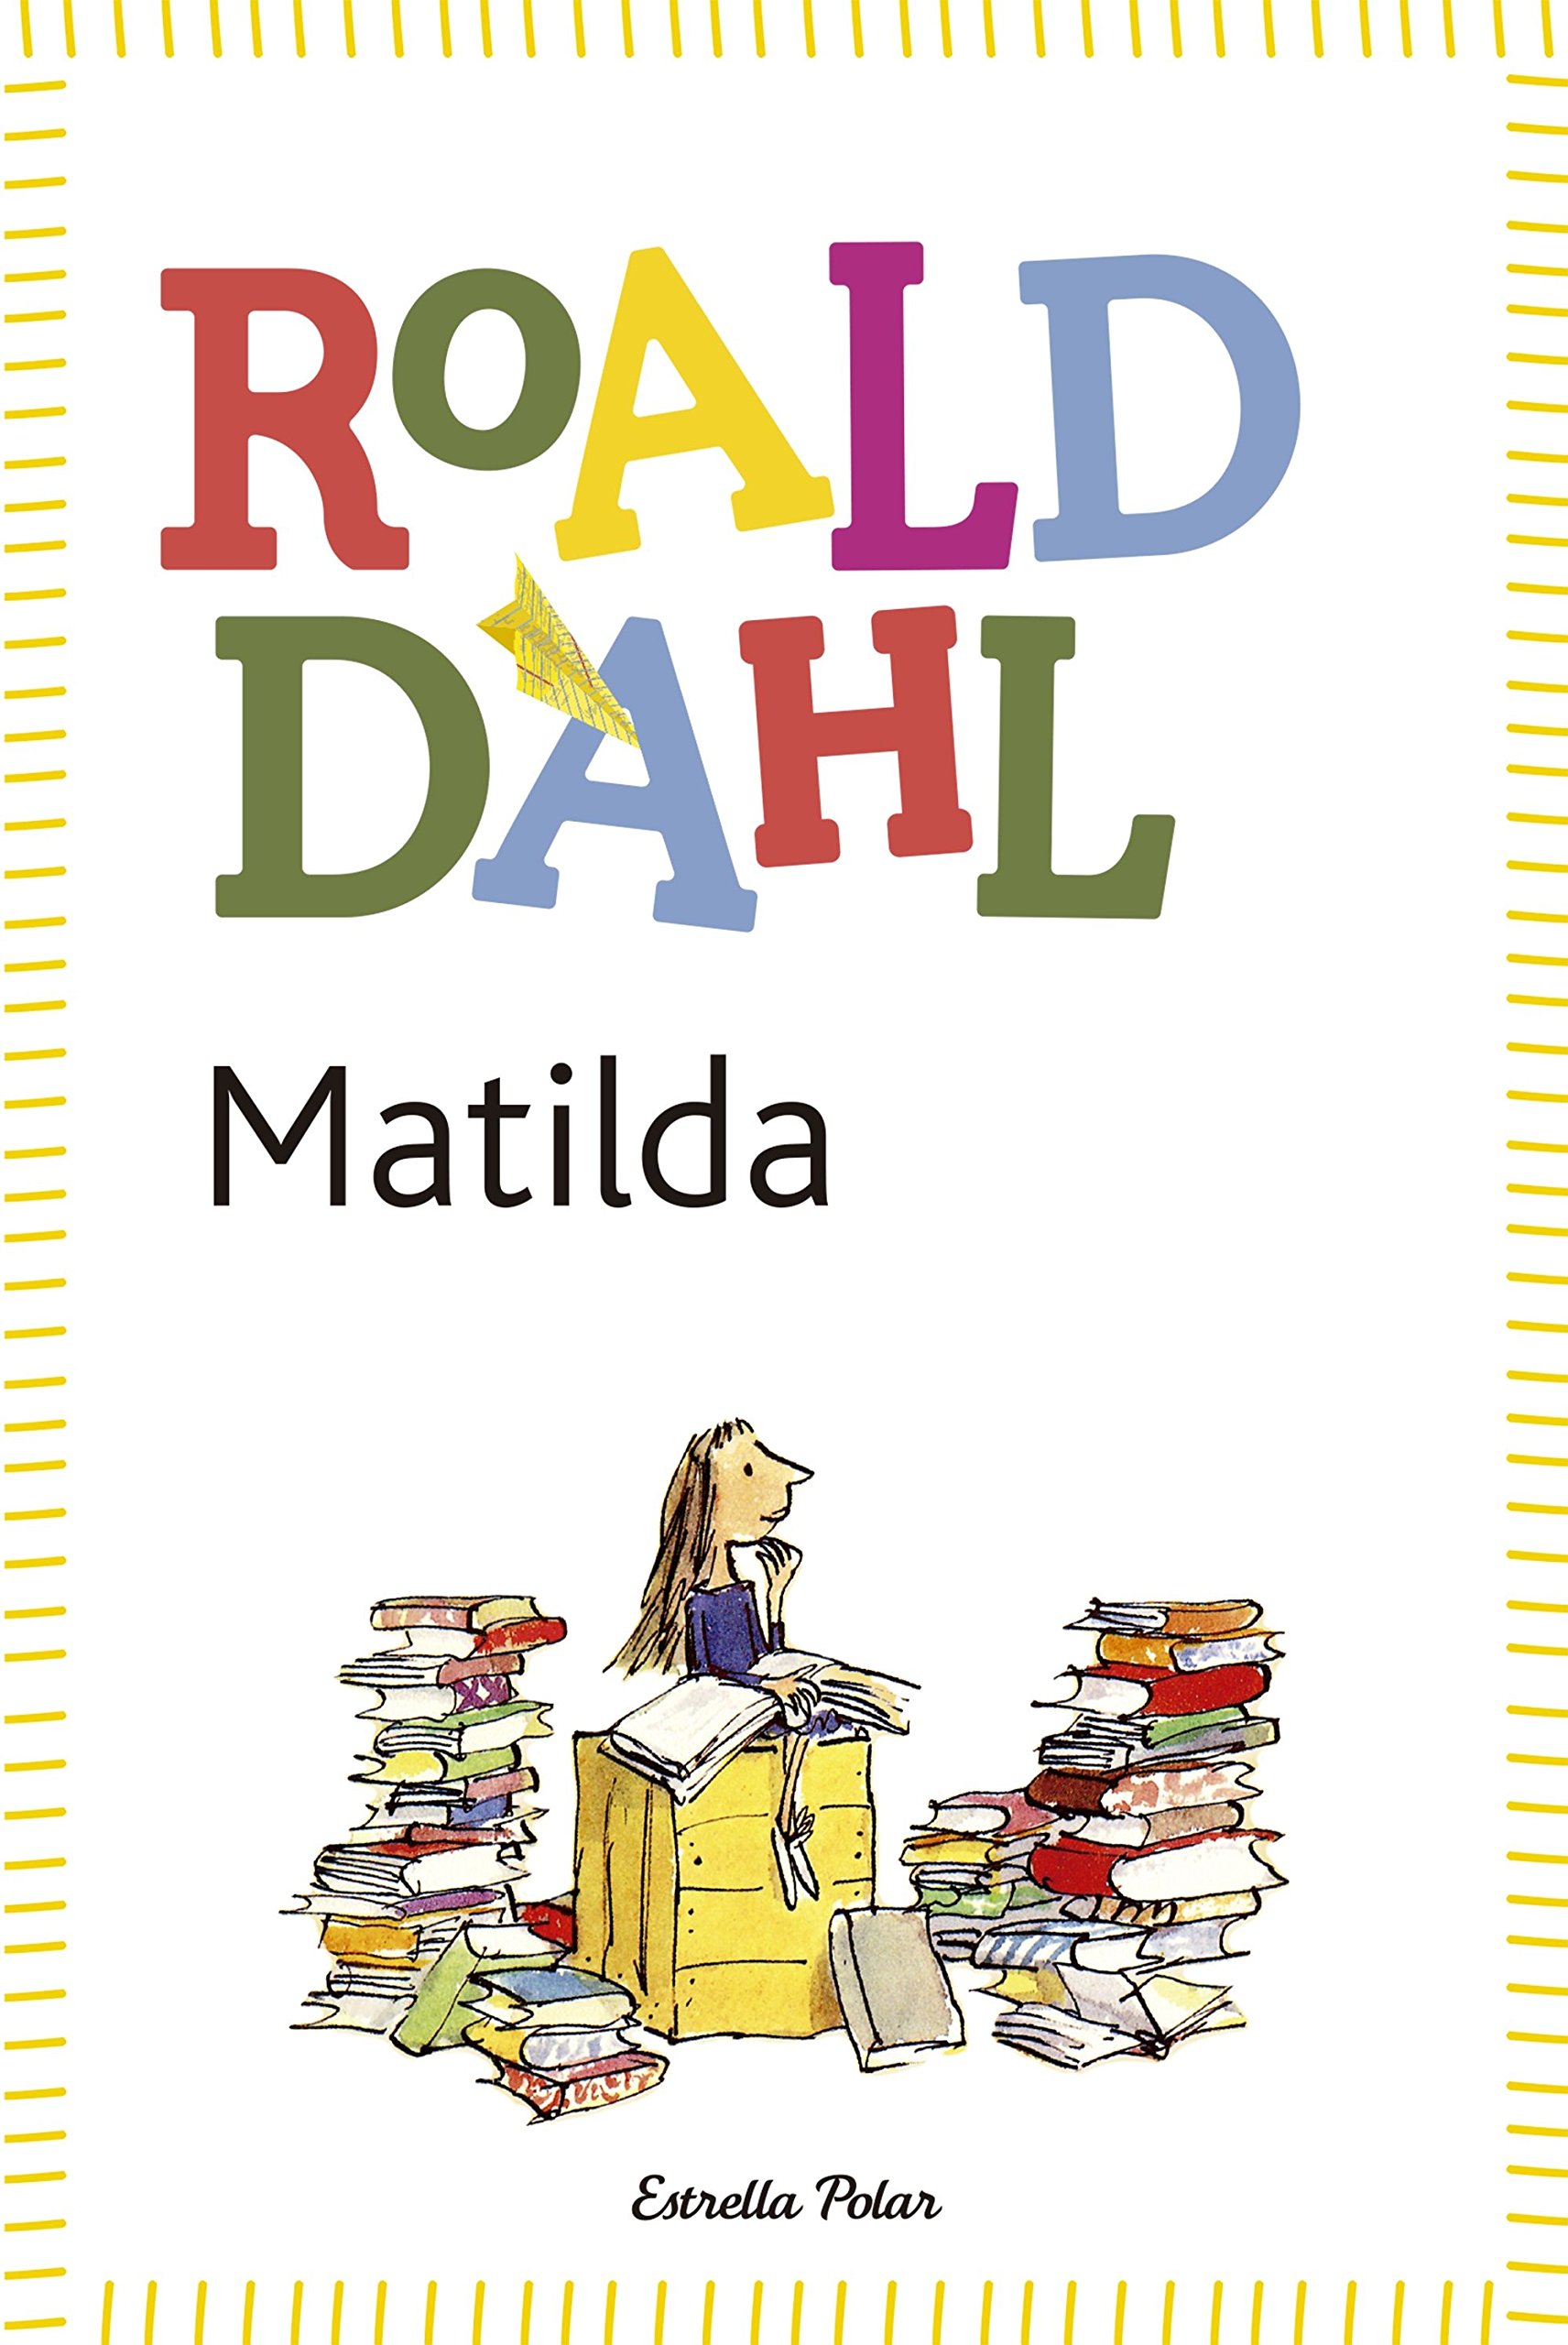 Matilda dahl. Dahl Roald "Matilda". Matilda by Roald Dahl.